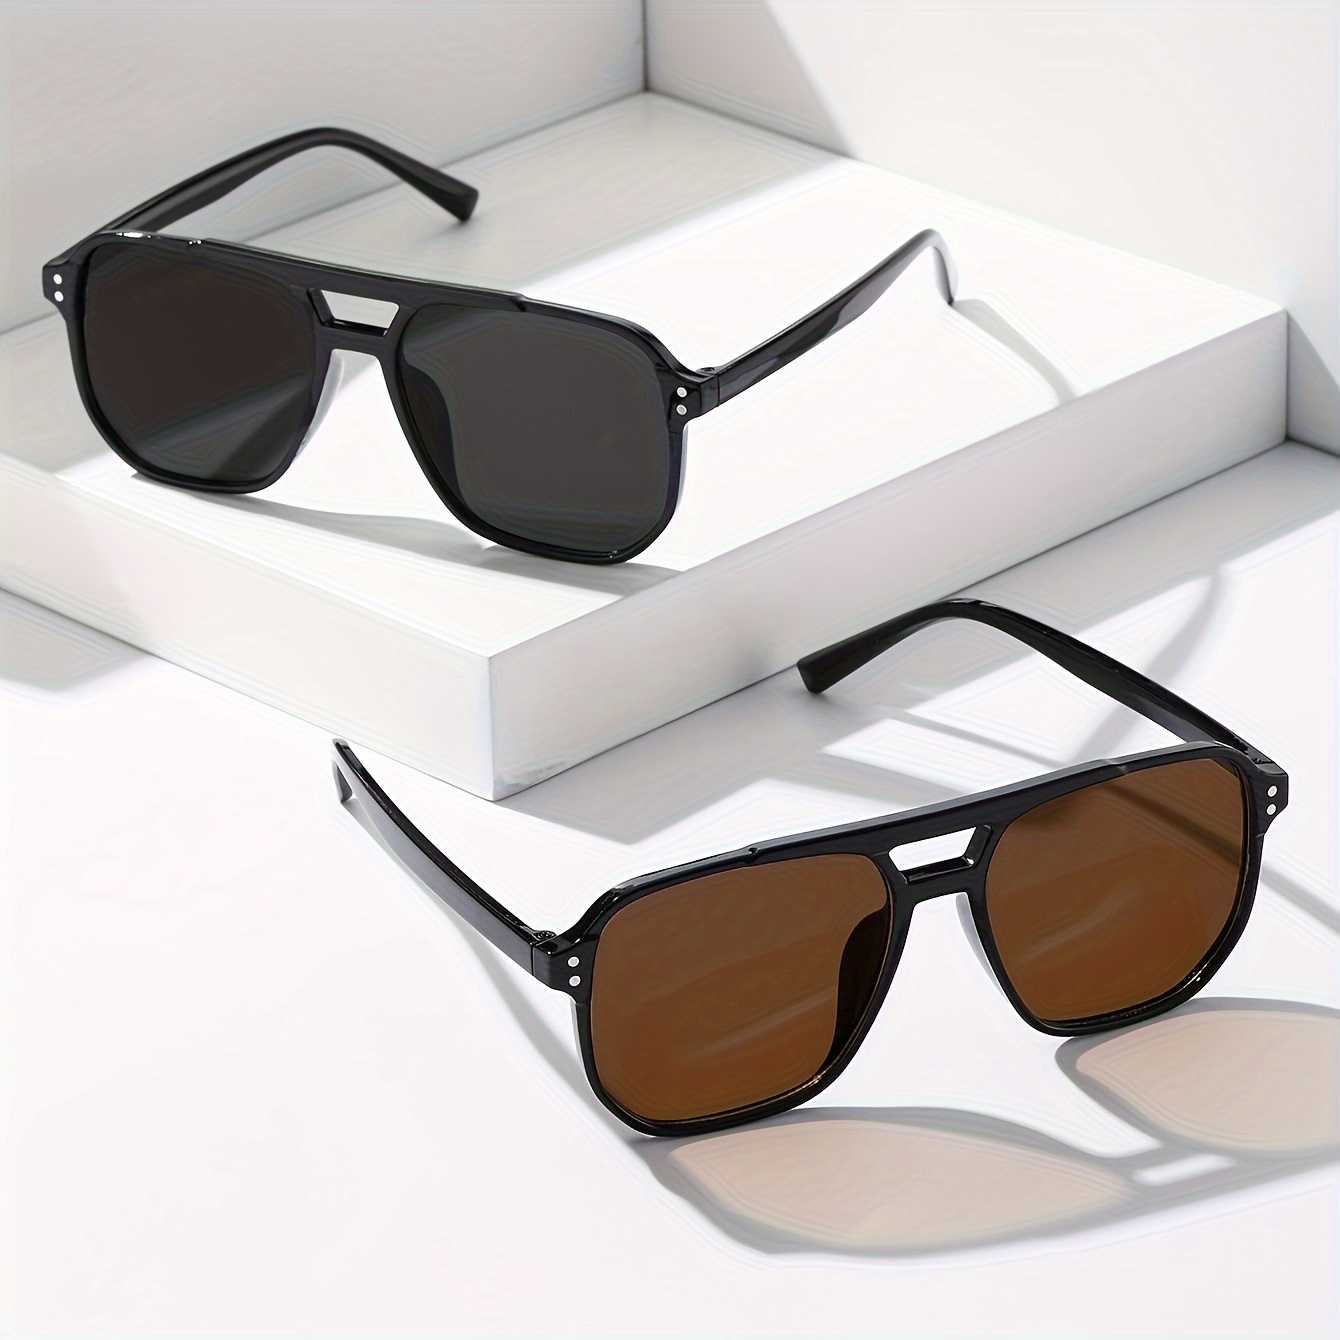 

2pcs Double Bridge Square Fashion Fashion Glasses For Women Men Anti Glare Sun Shades For Driving Beach Travel